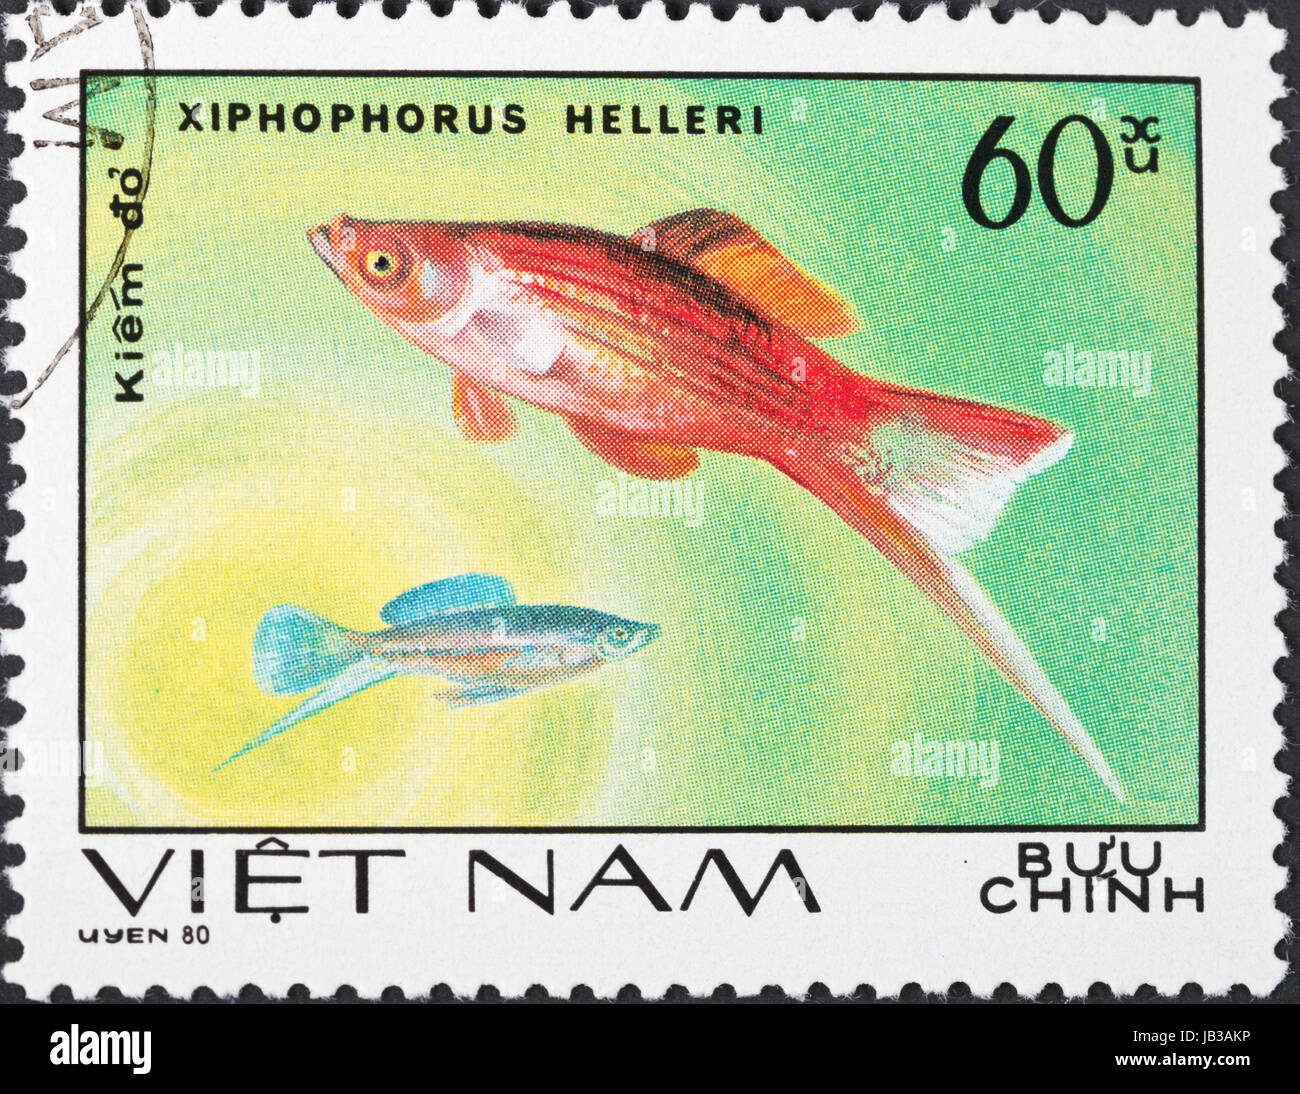 SOCIALIST REPUBLIC OF VIETNAM - CIRCA 1980: A postage stamp printed in the Vietnam shows Xiphophorus helleri - green swordtail fish, circa 1980 Stock Photo